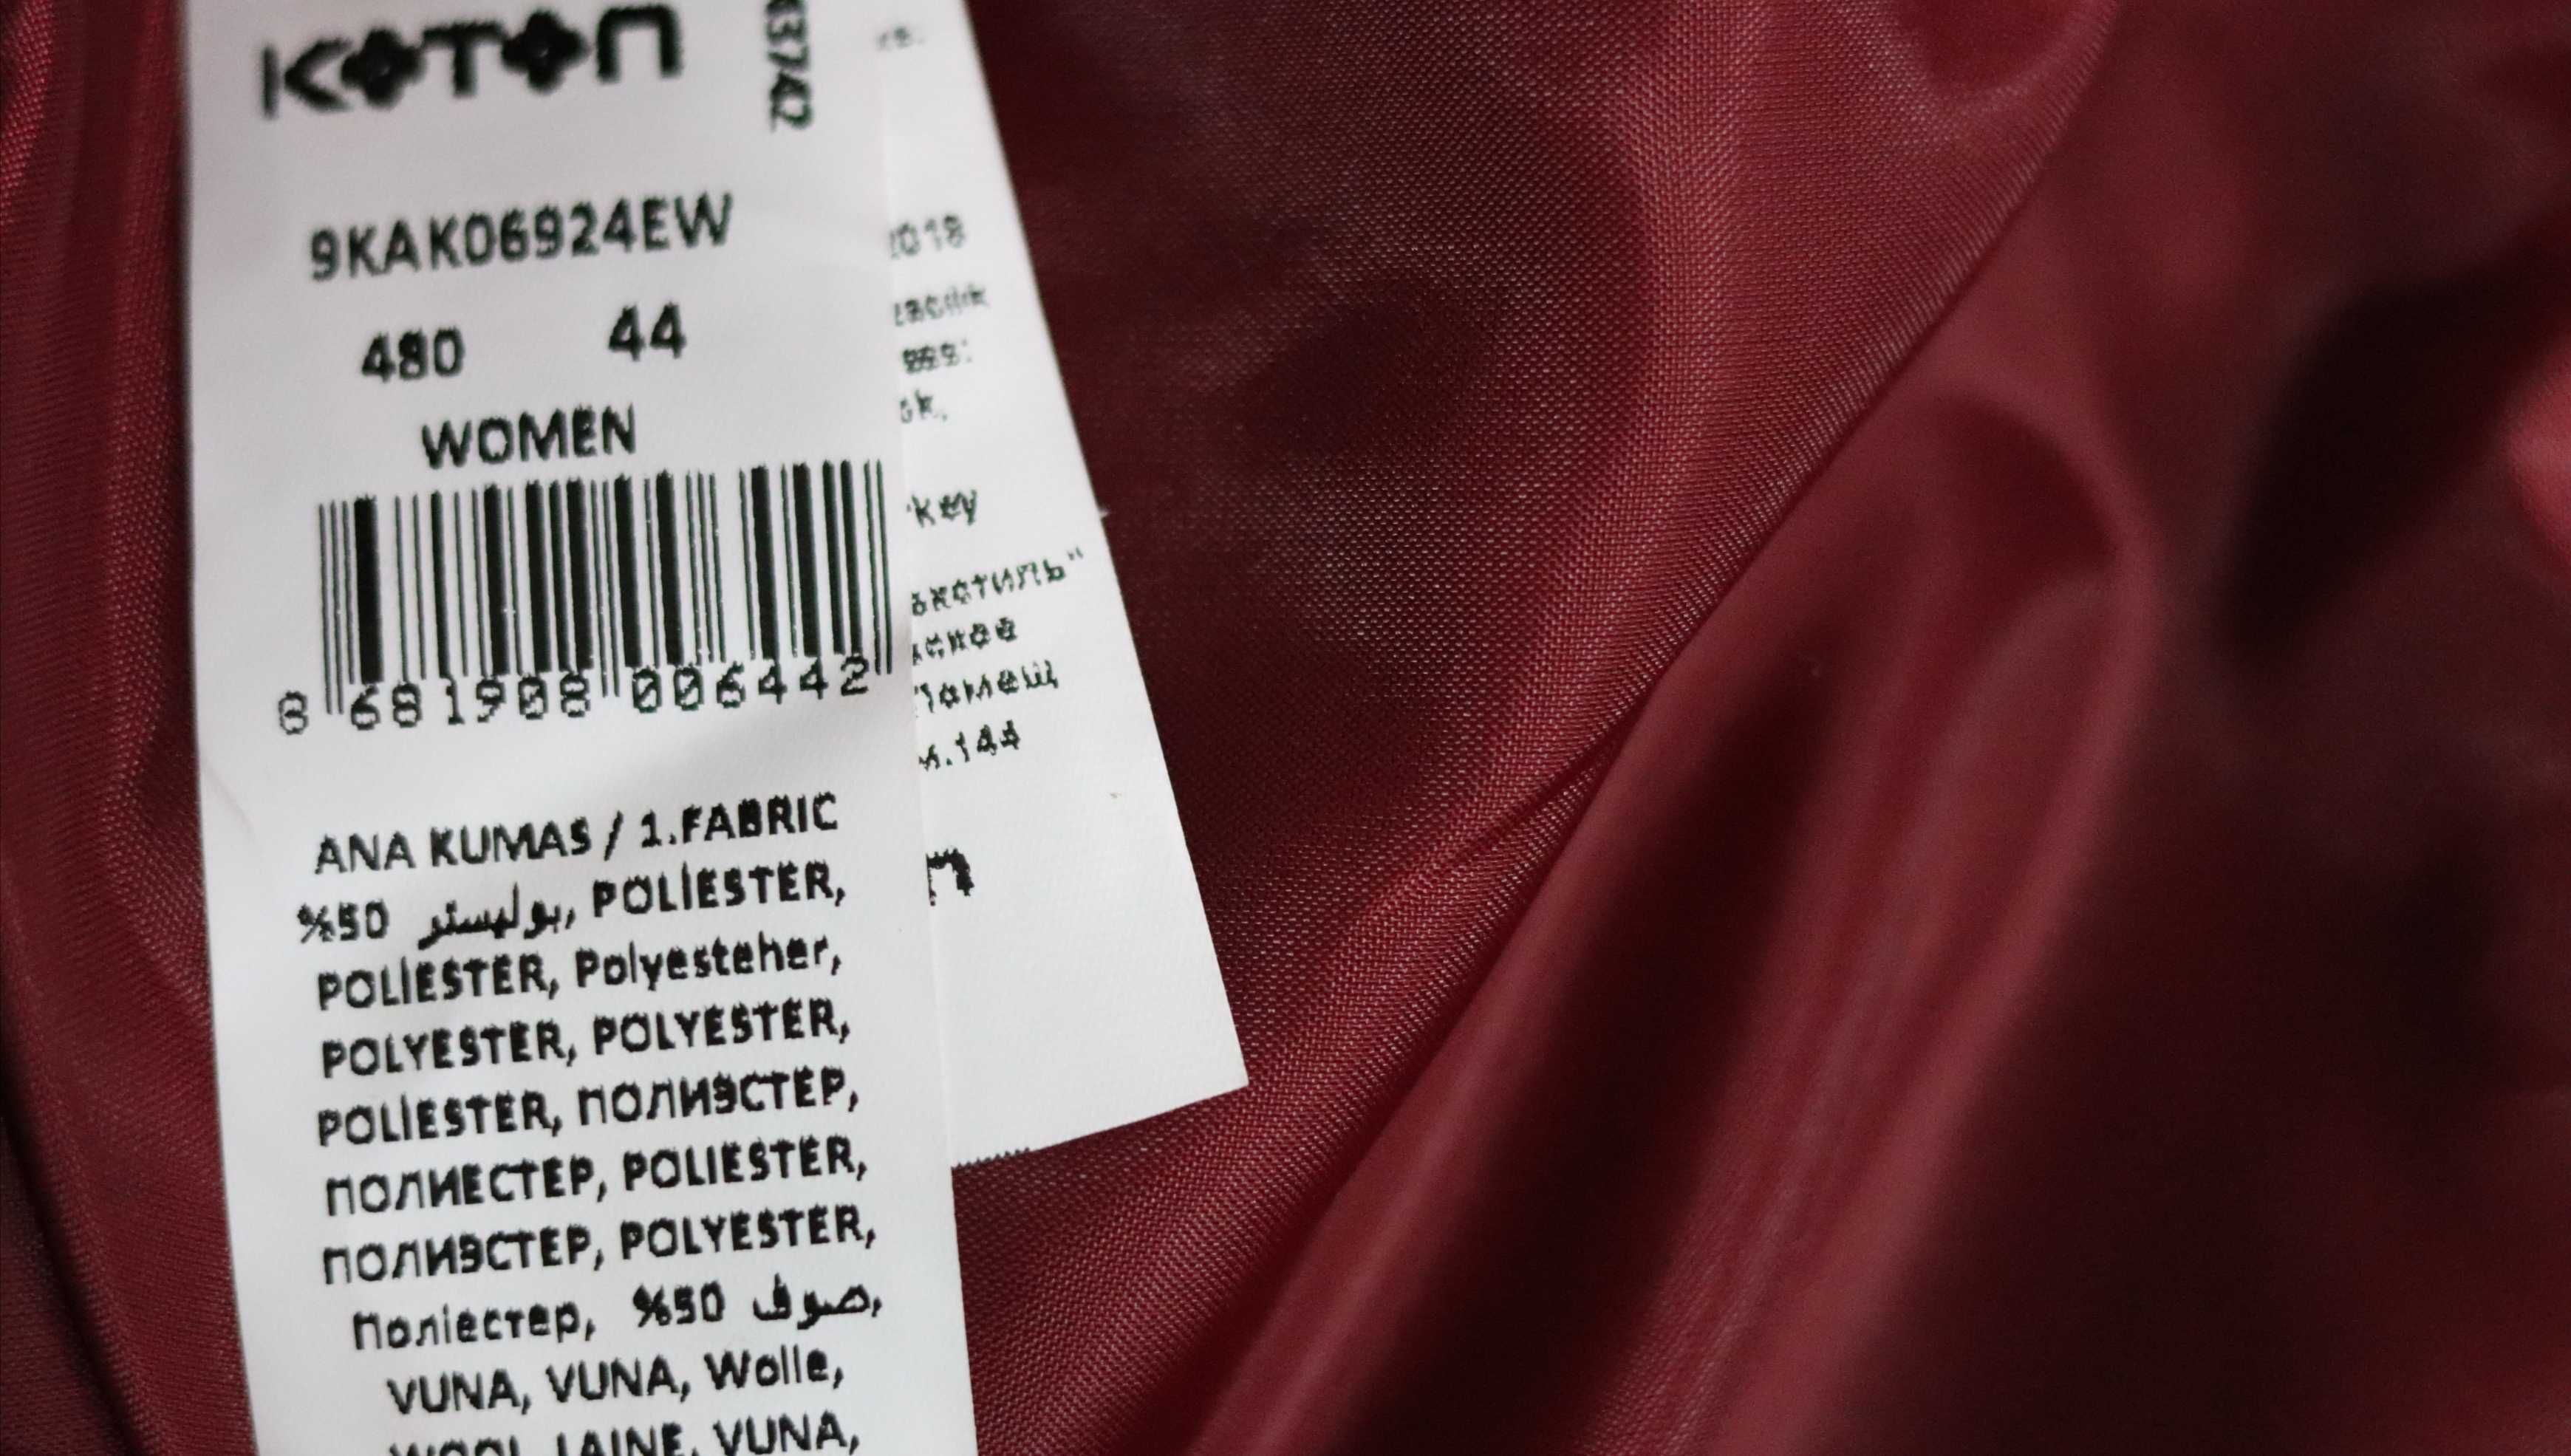 Palton dama L, Koton 44, rosu, lana amestec, nou cu eticheta